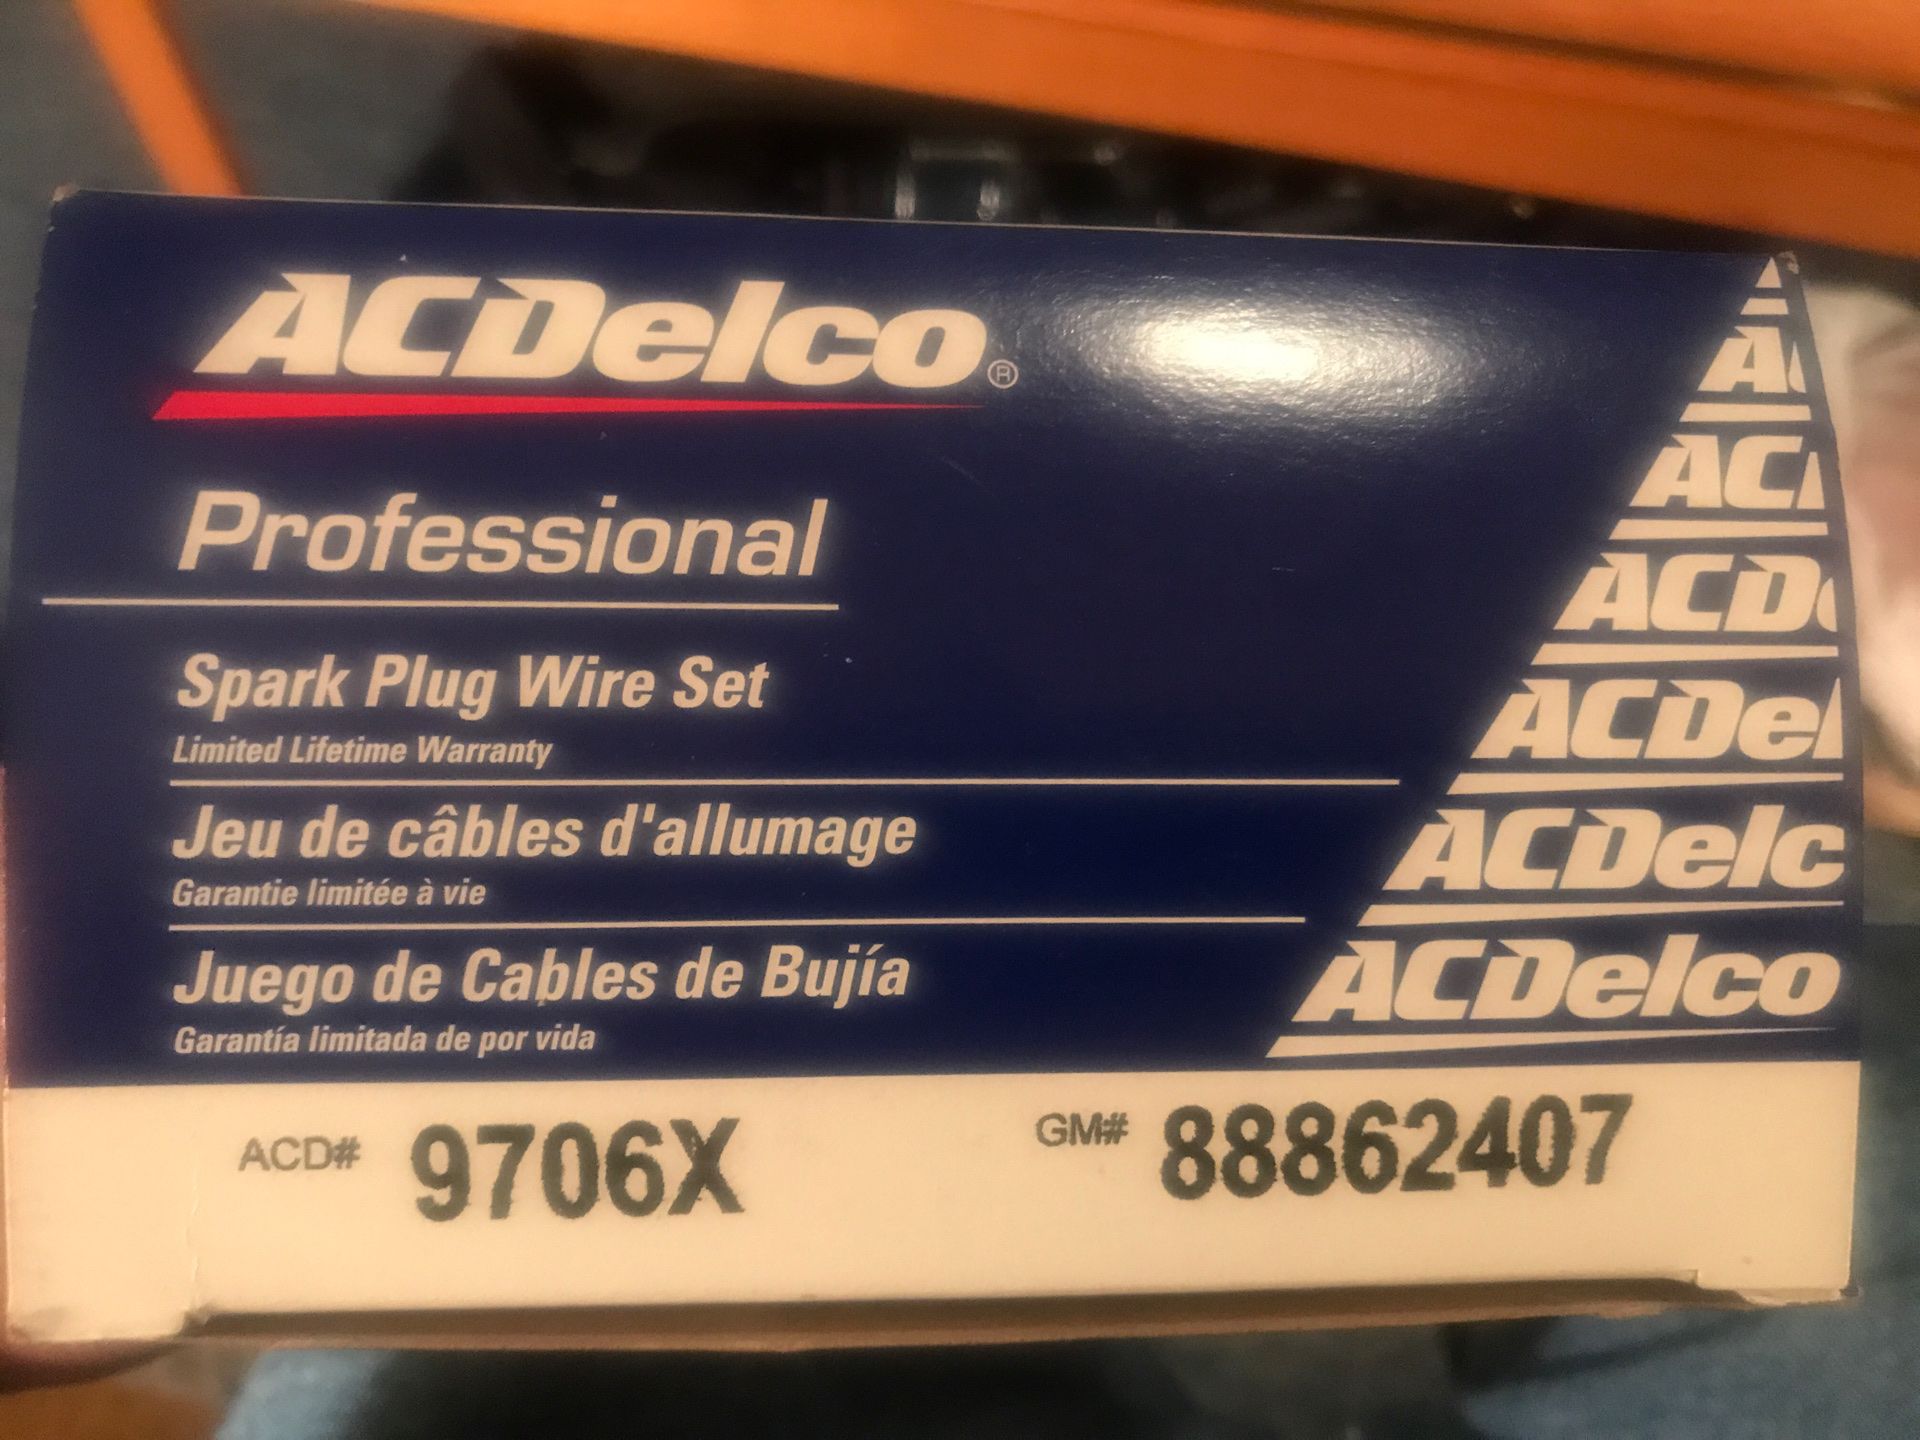 AC Delco Wireset Part#9706X